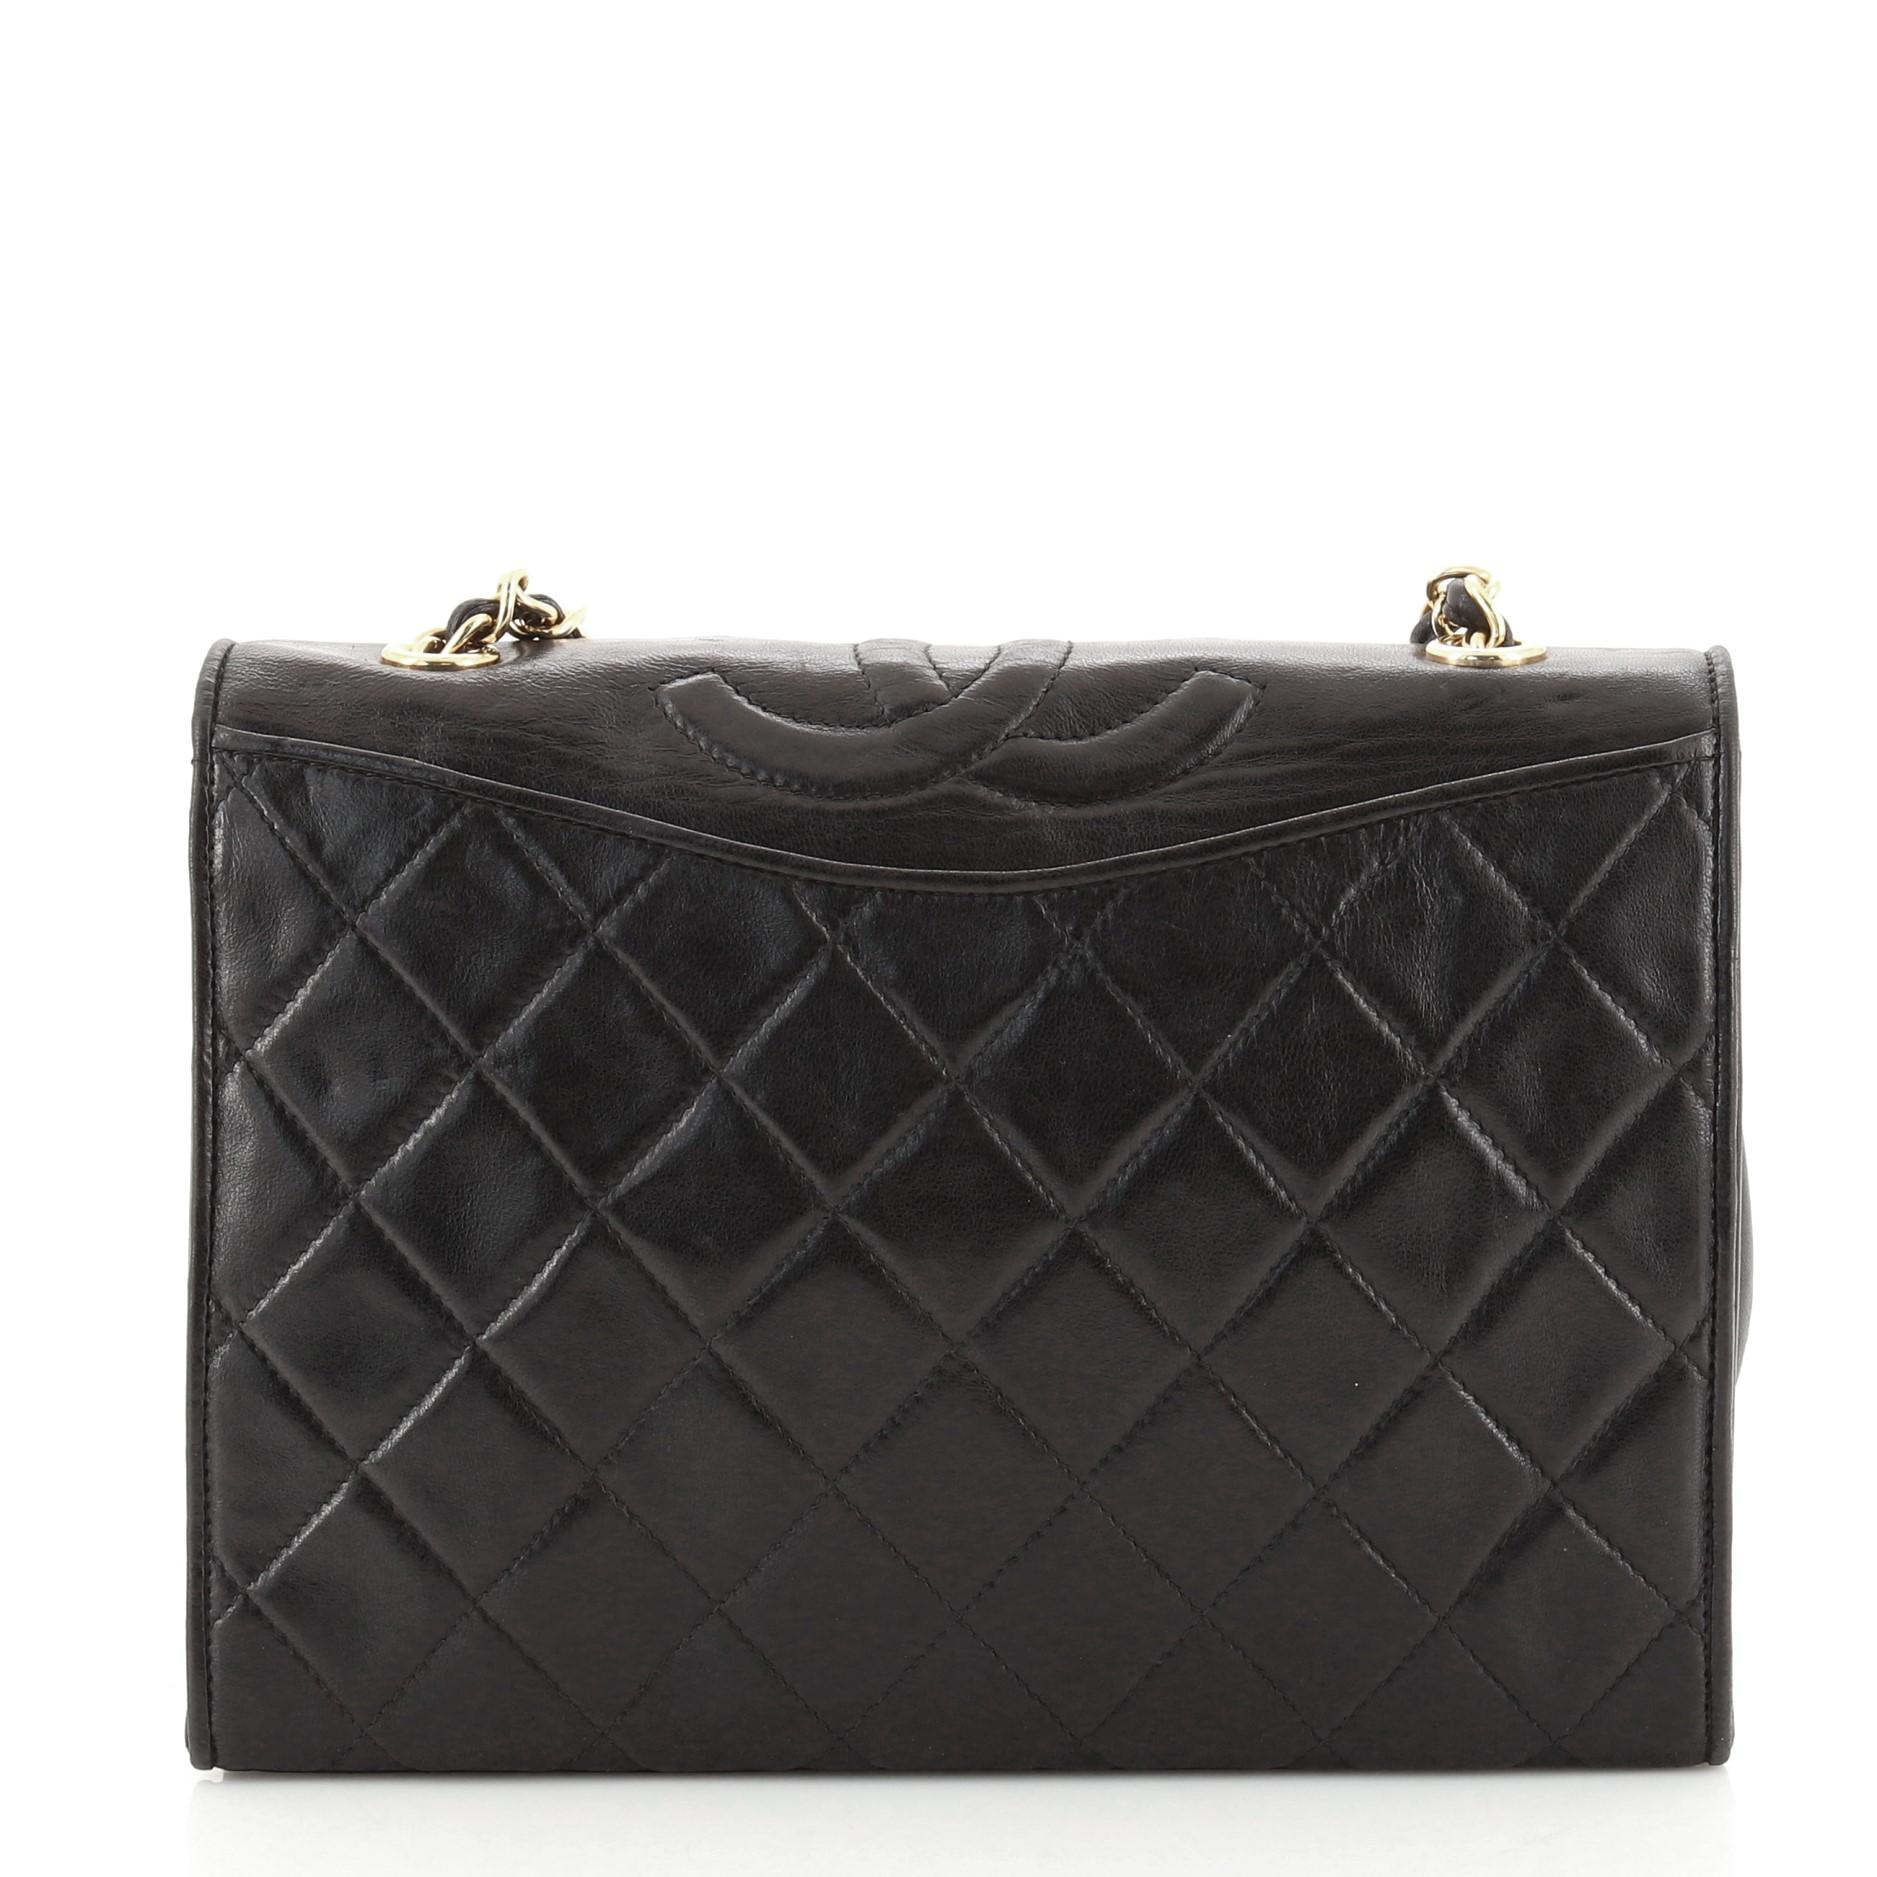 Chanel Vintage Black Quilted Lambskin Leather CC Full Medium Flap Bag


67997MSC